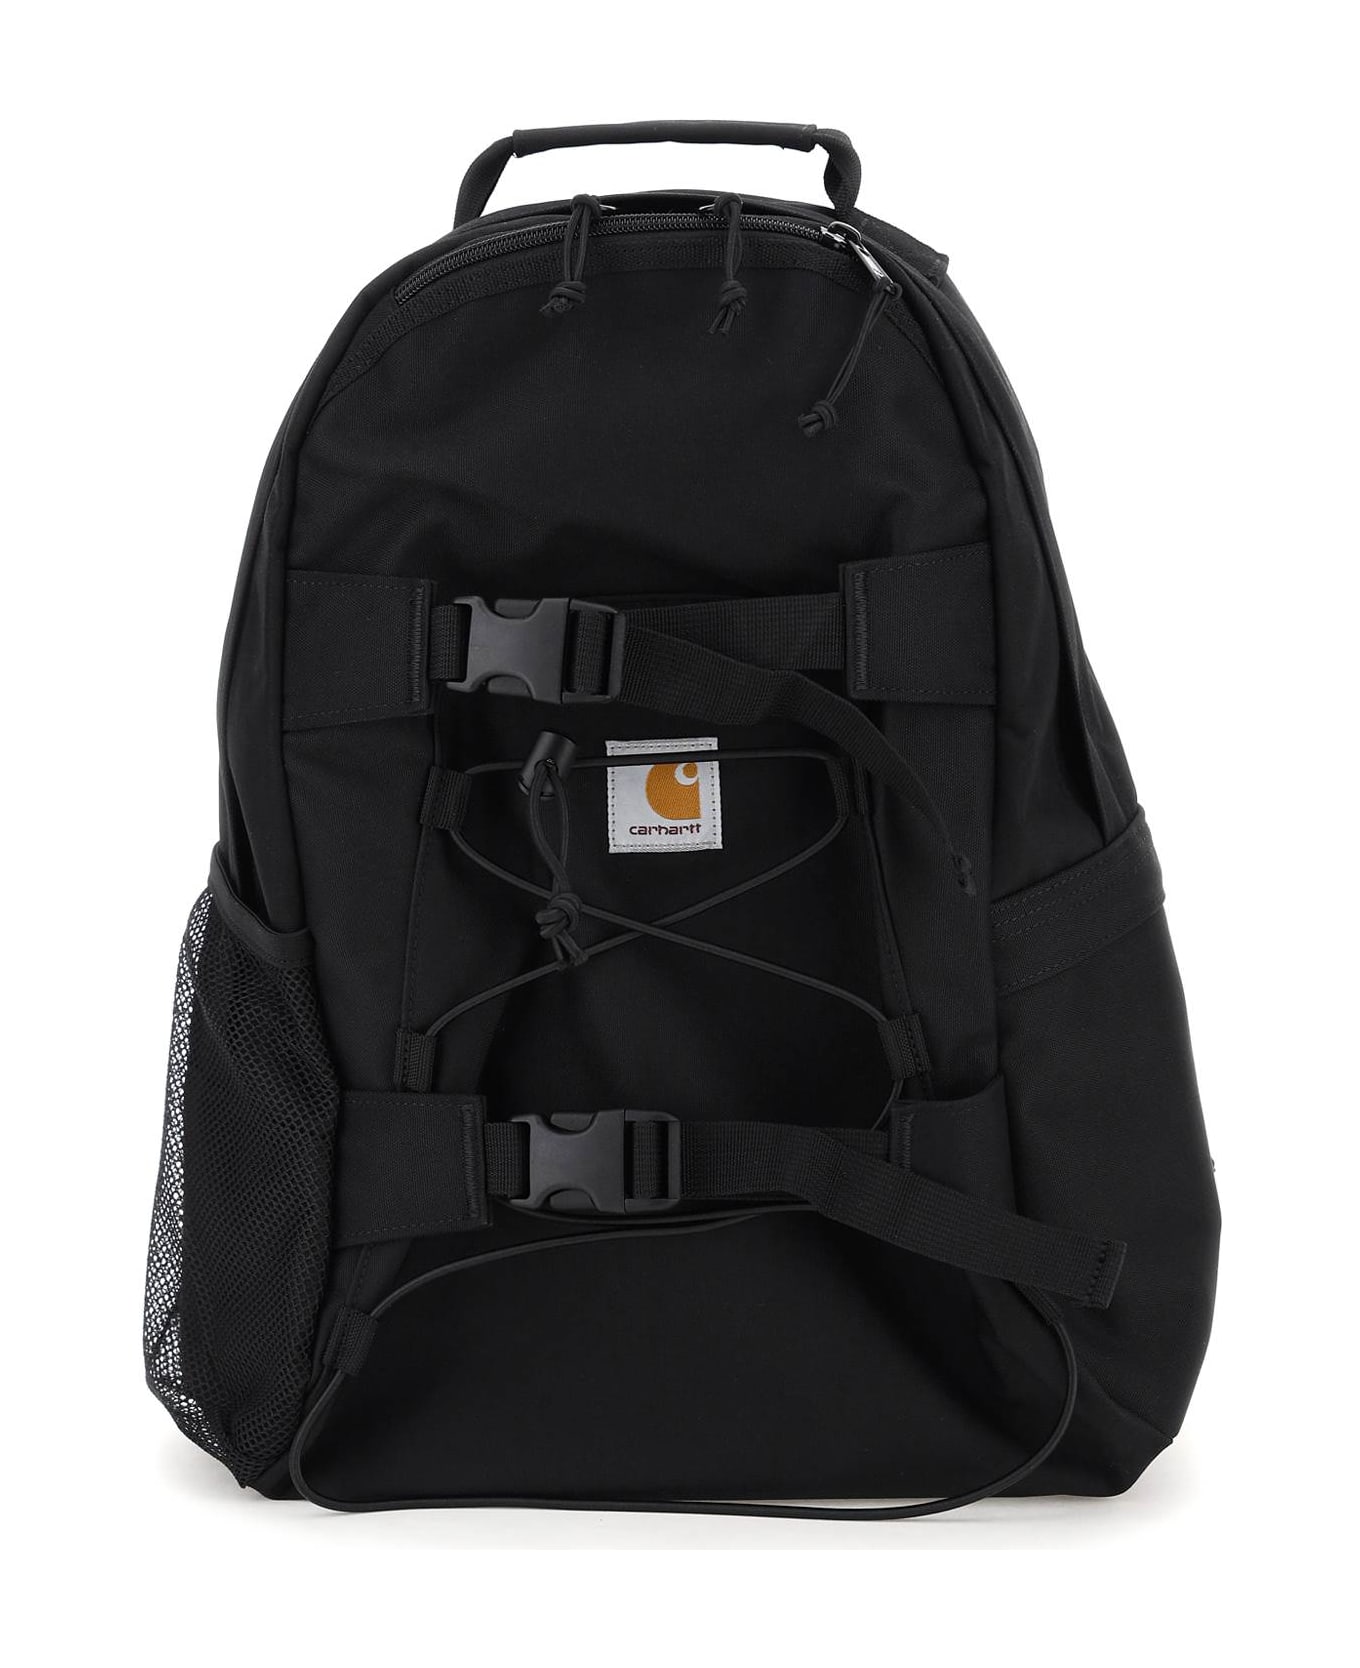 Carhartt 'kickflip Agate' Backpack - Xx Black